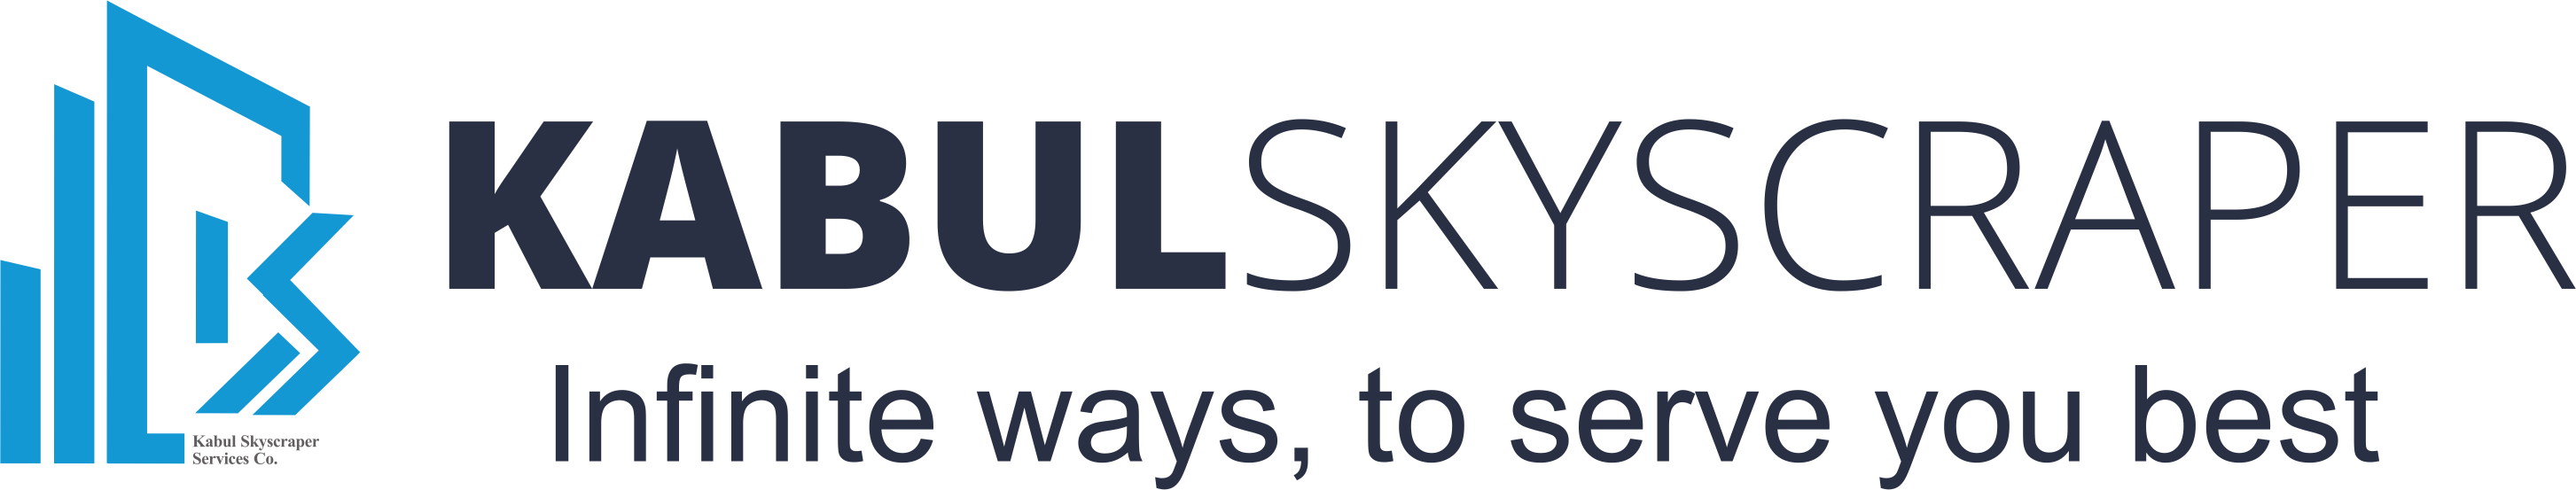 Kabul Skyscraper Services (KSS) logo